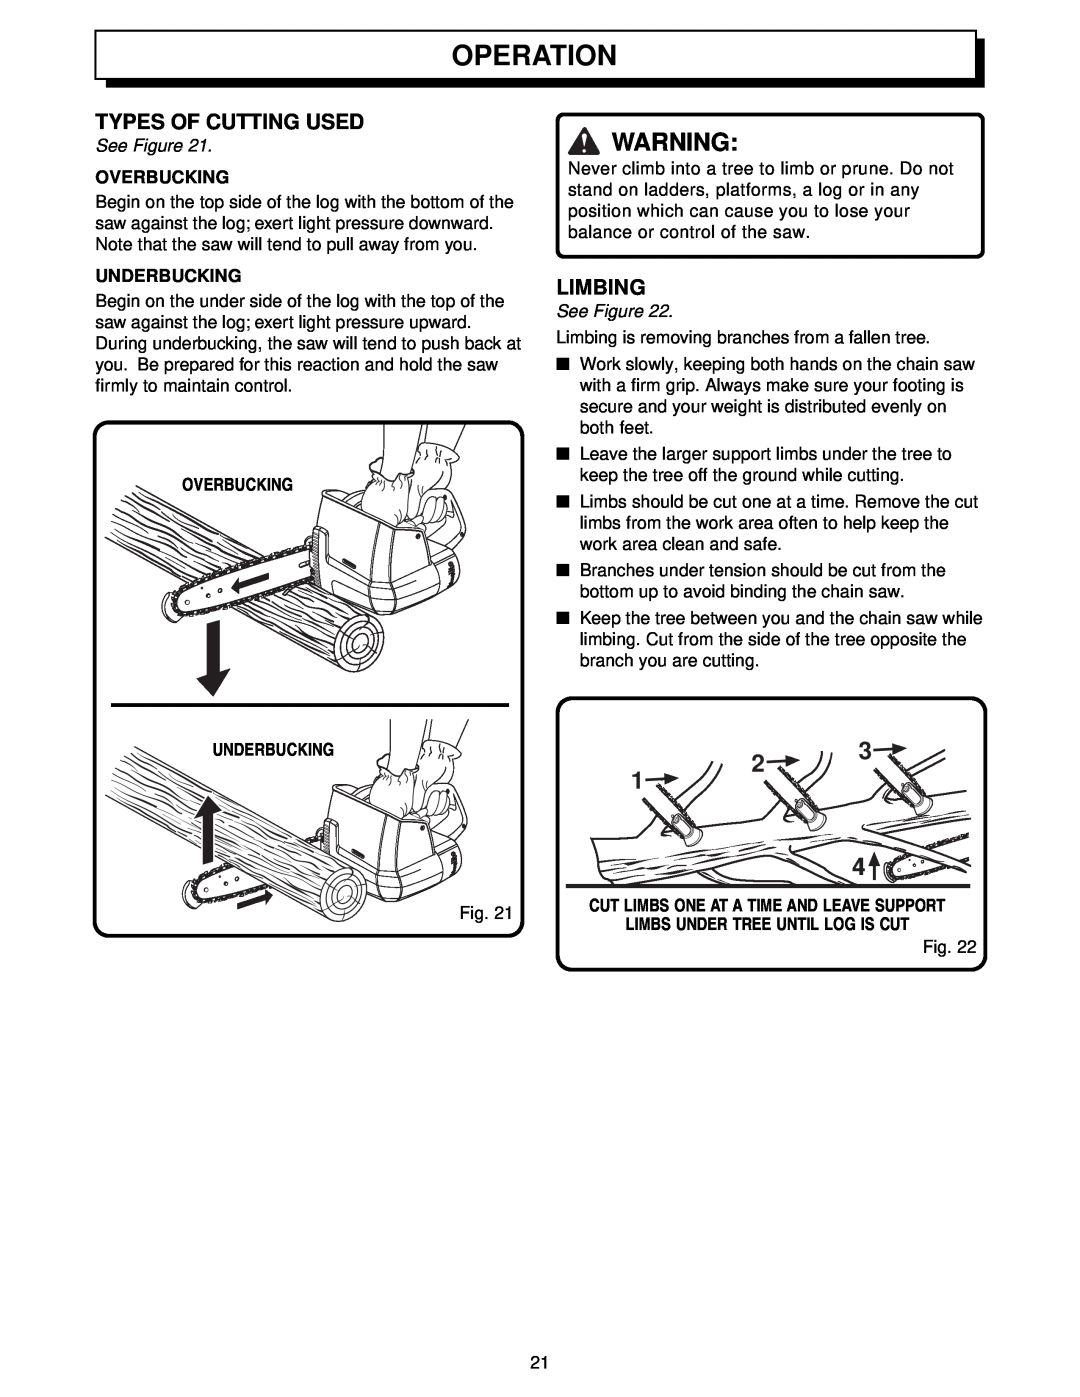 Homelite UT34010 manual Types Of Cutting Used, Limbing, Overbucking, Underbucking, Operation, See Figure 